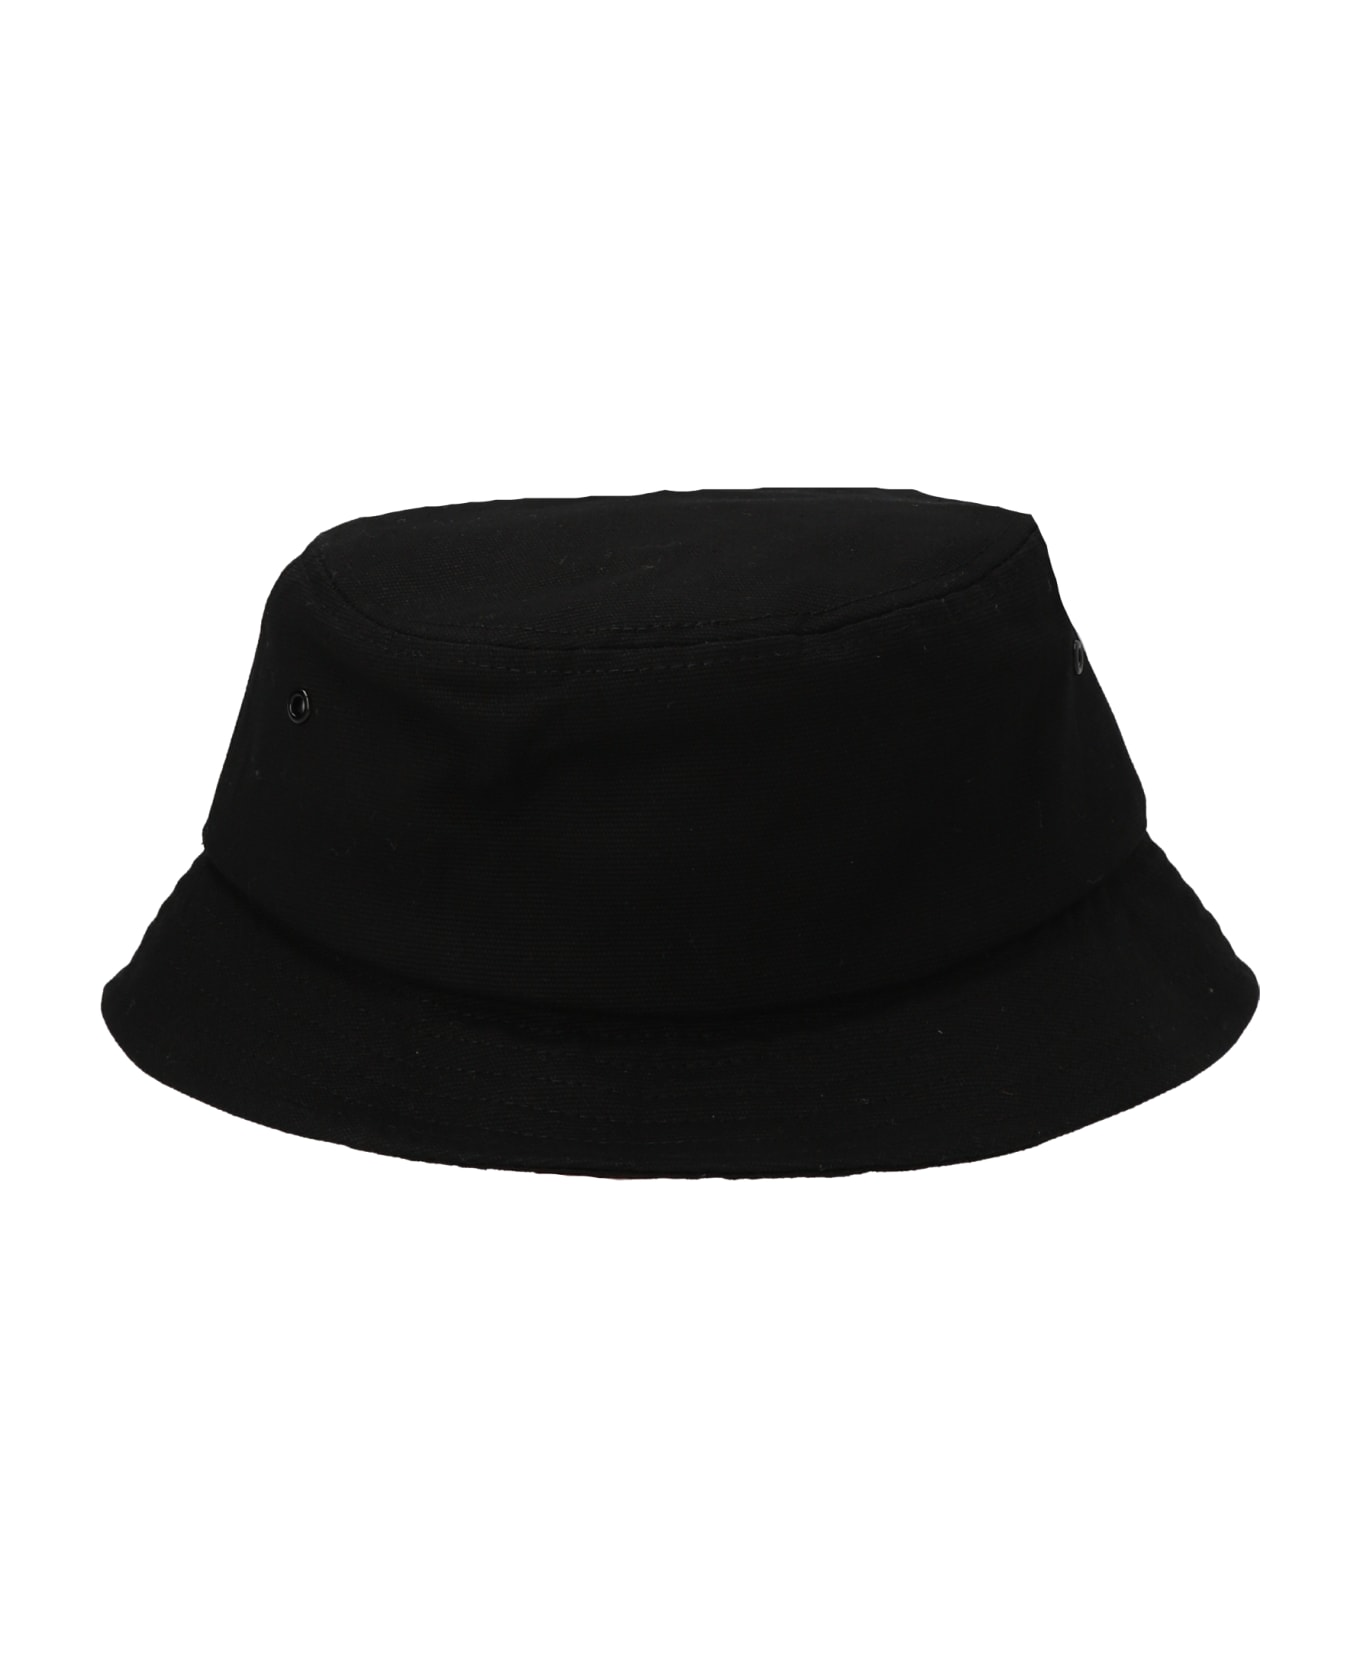 Kenzo 'bob  Bucket Hat - Black  